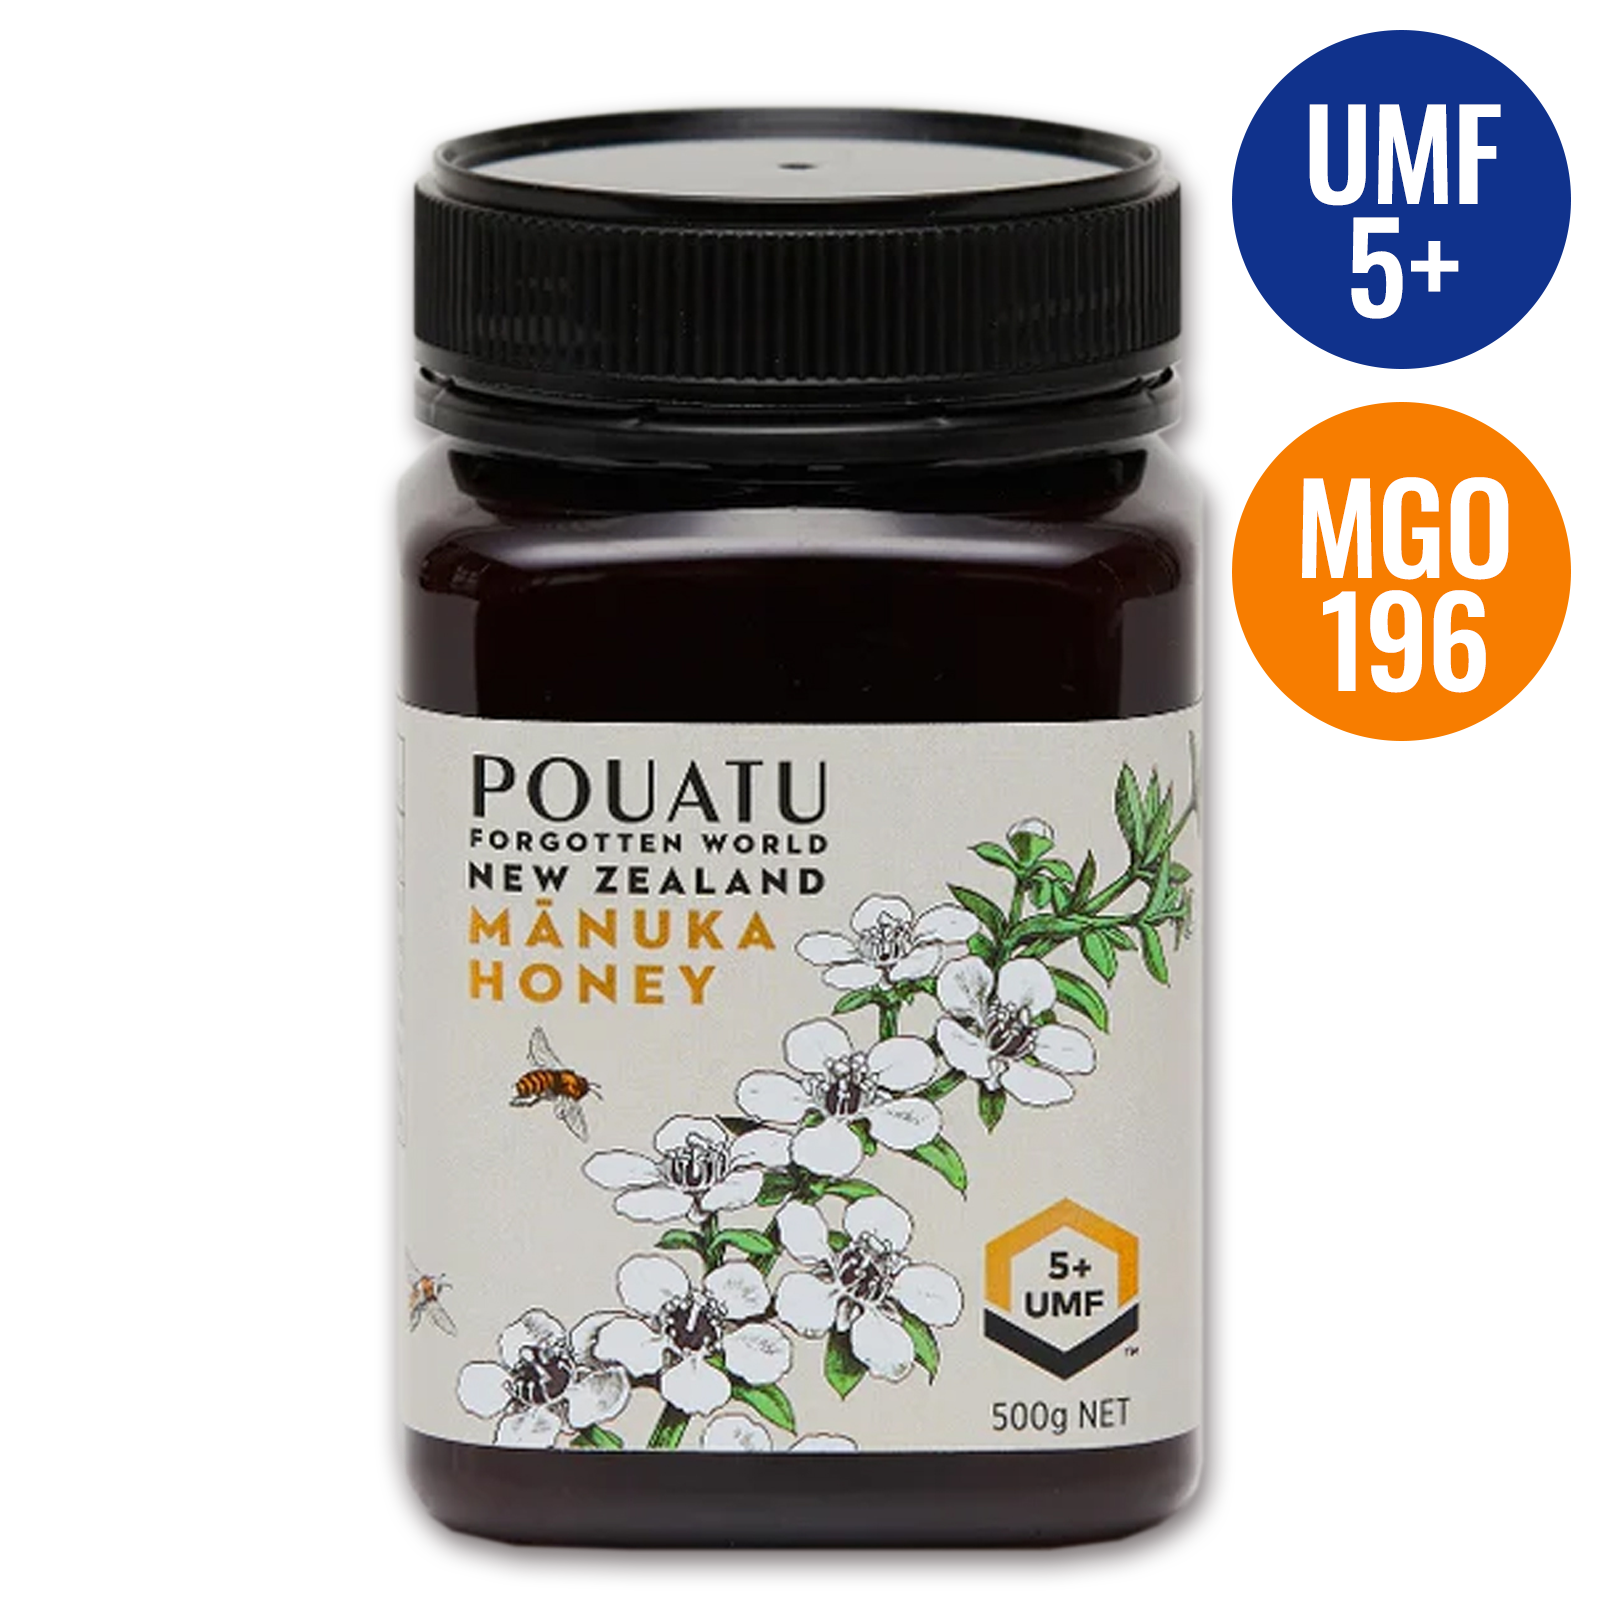 Premium All Natural Manuka Honey UMF5+ MGO196 from New Zealand (500g) - Horizon Farms